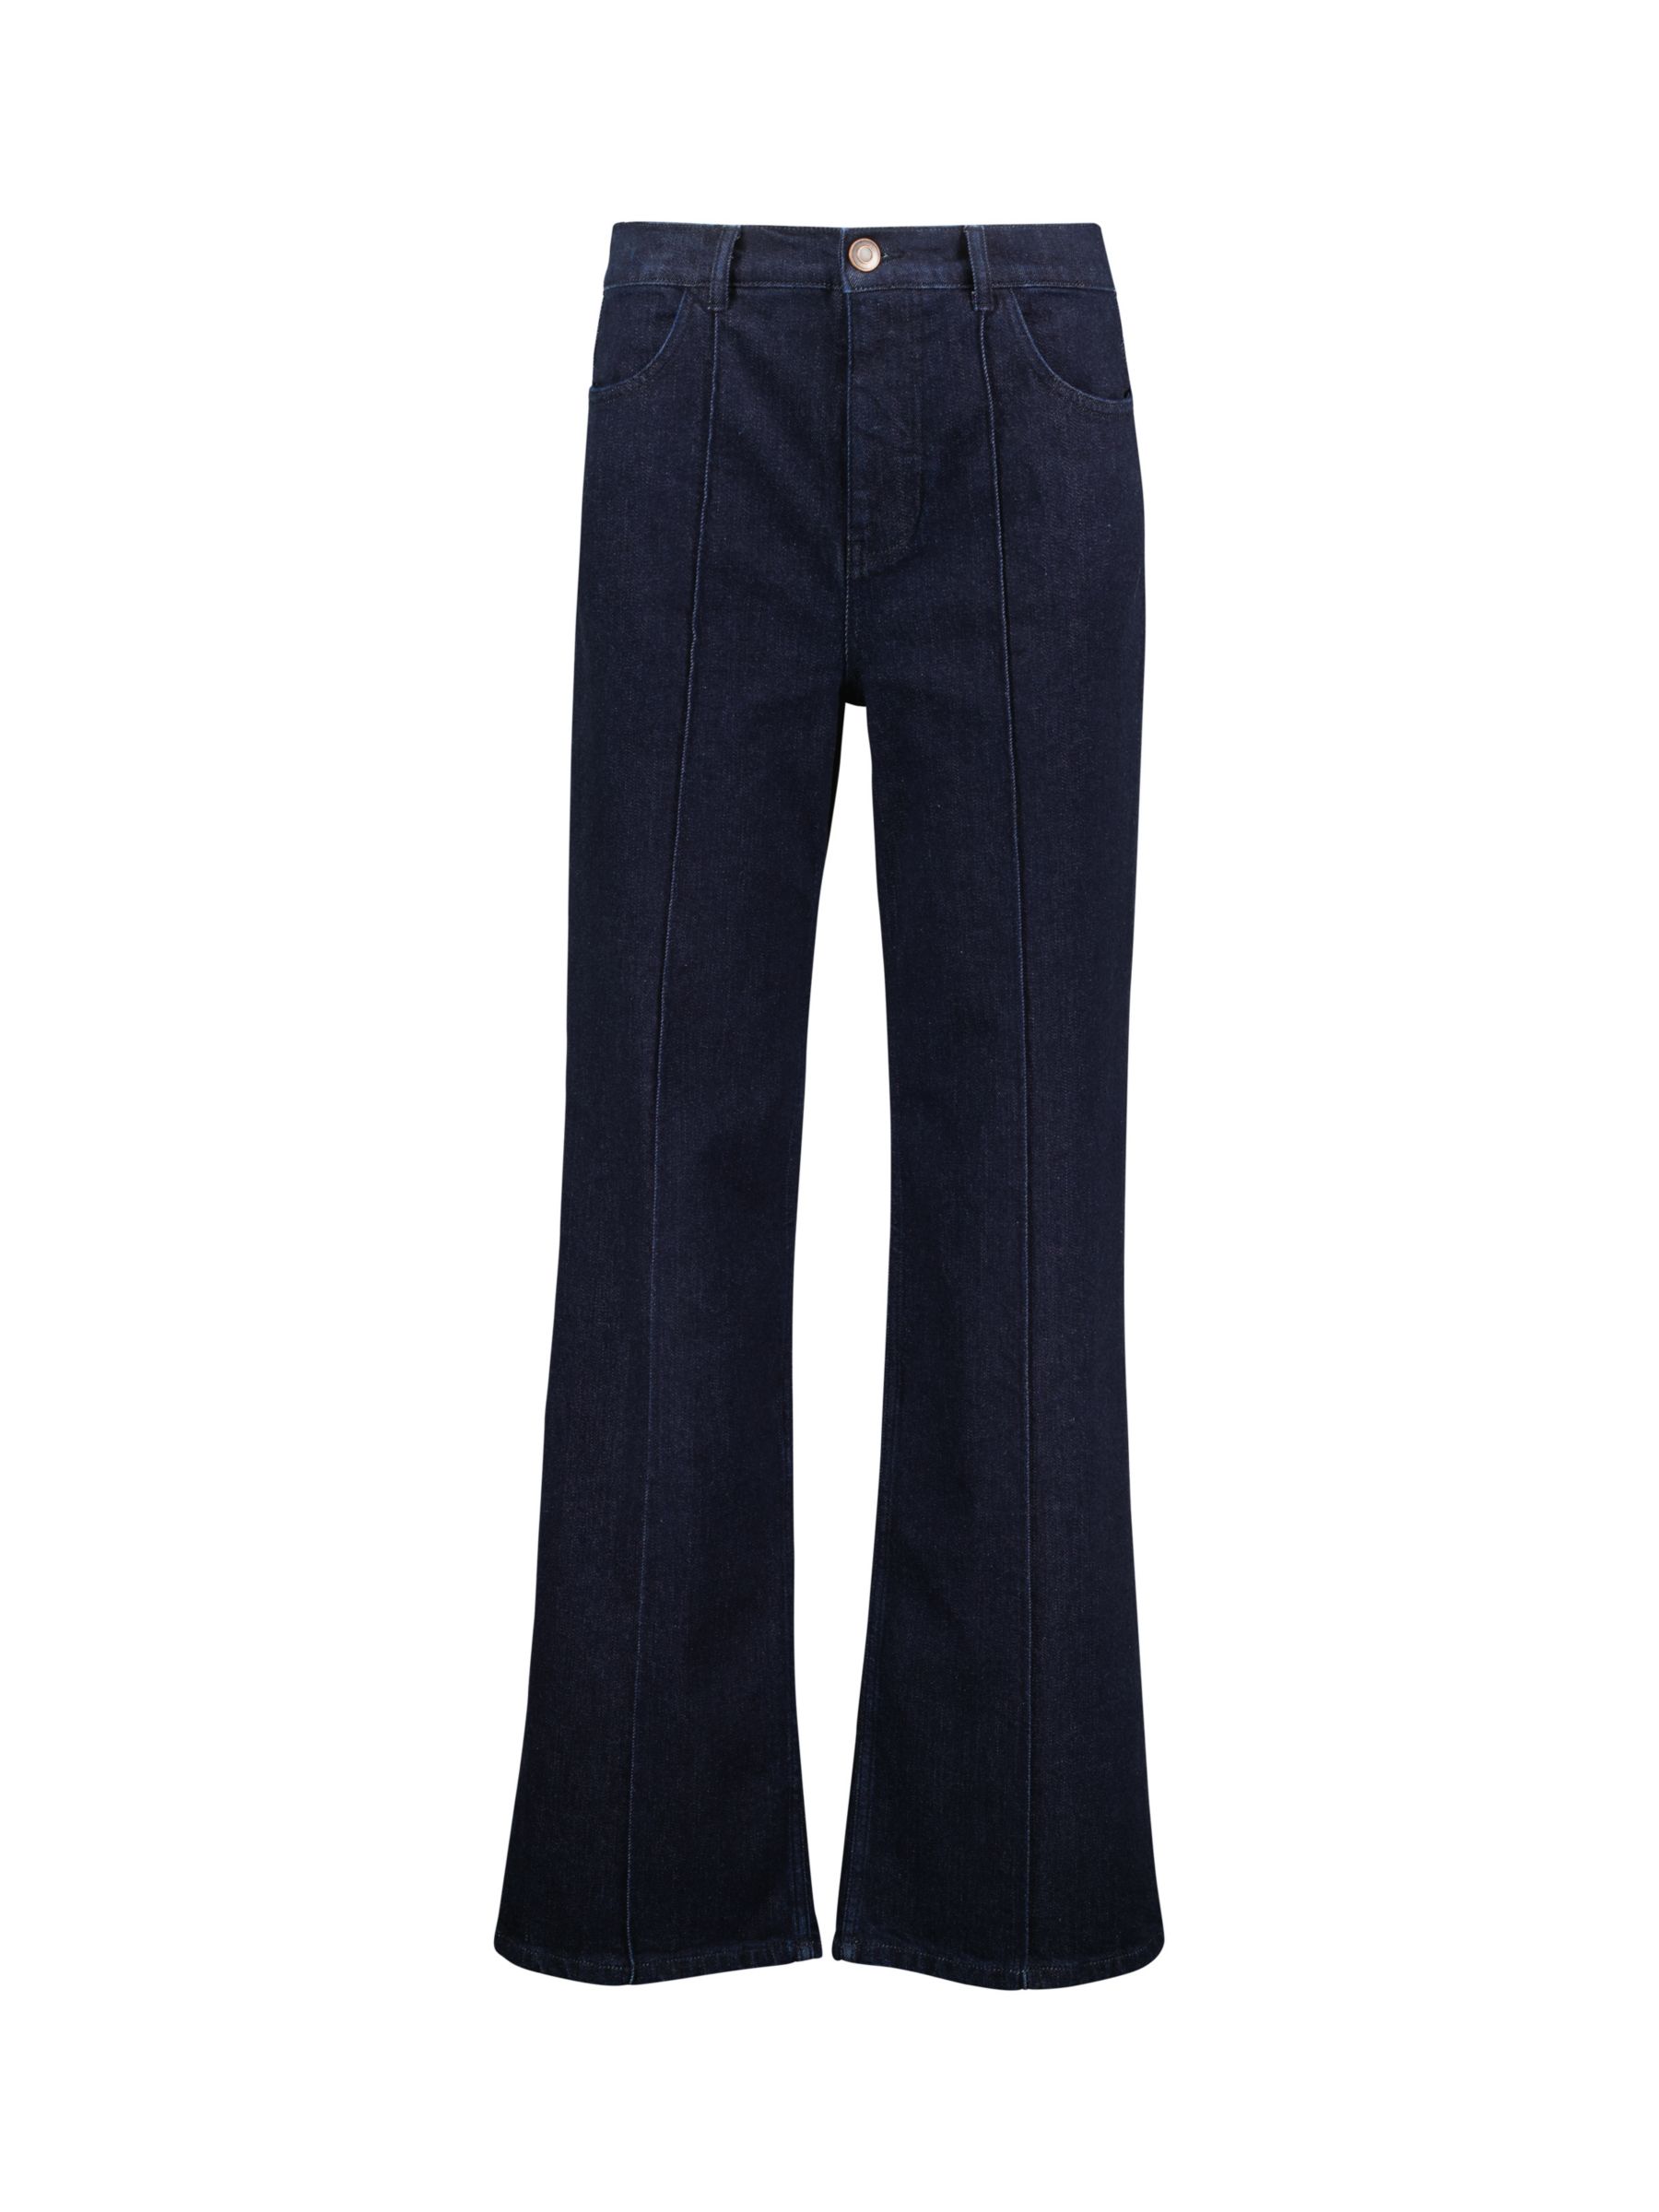 Buy Baukjen Pintuck Wide Leg Jeans, Dark Wash Online at johnlewis.com